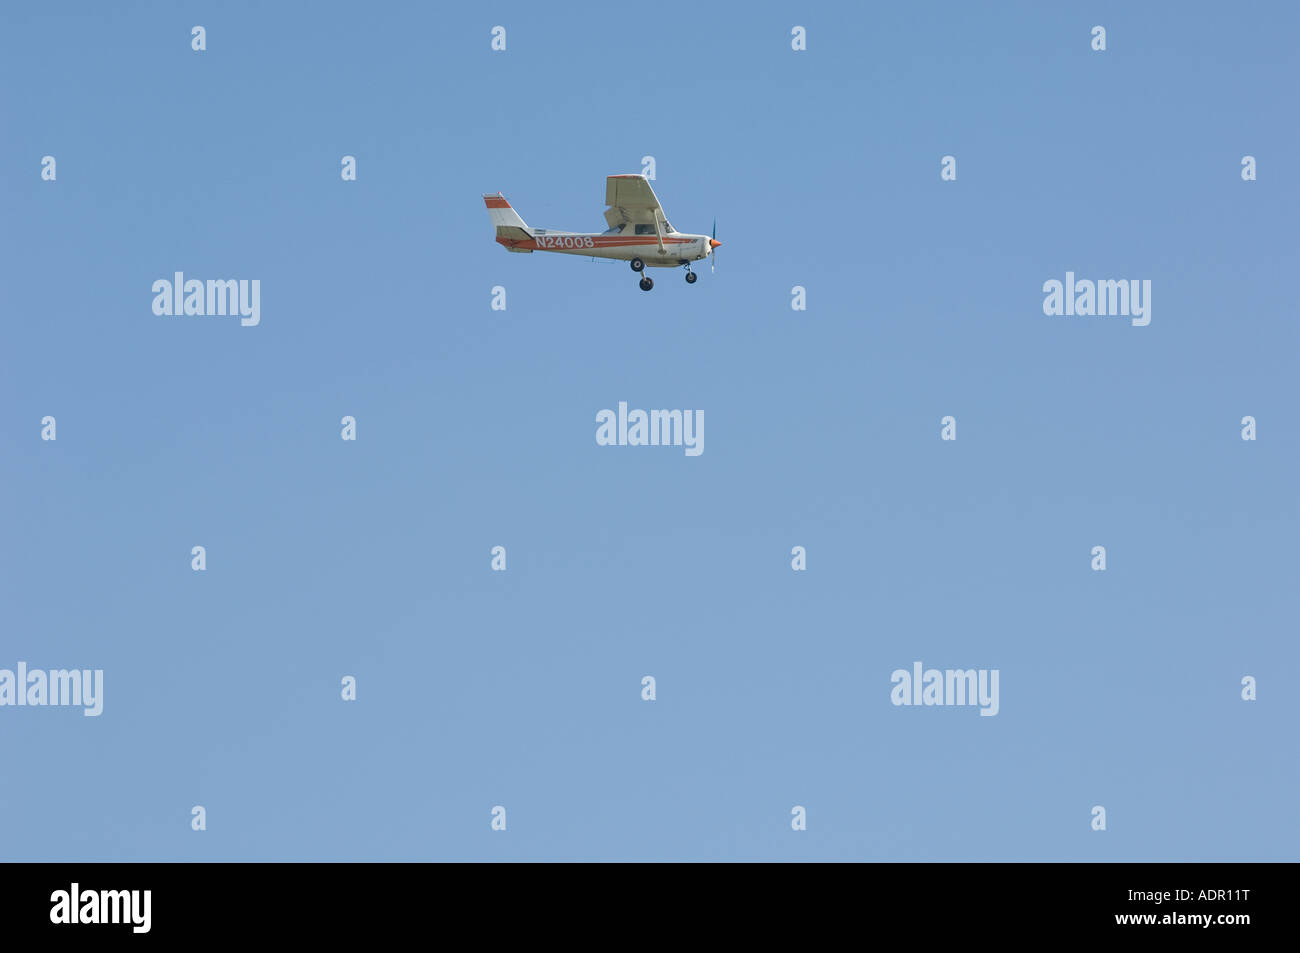 A Cessna 152 two seat single engine airplane flies along a blue sky Stock Photo